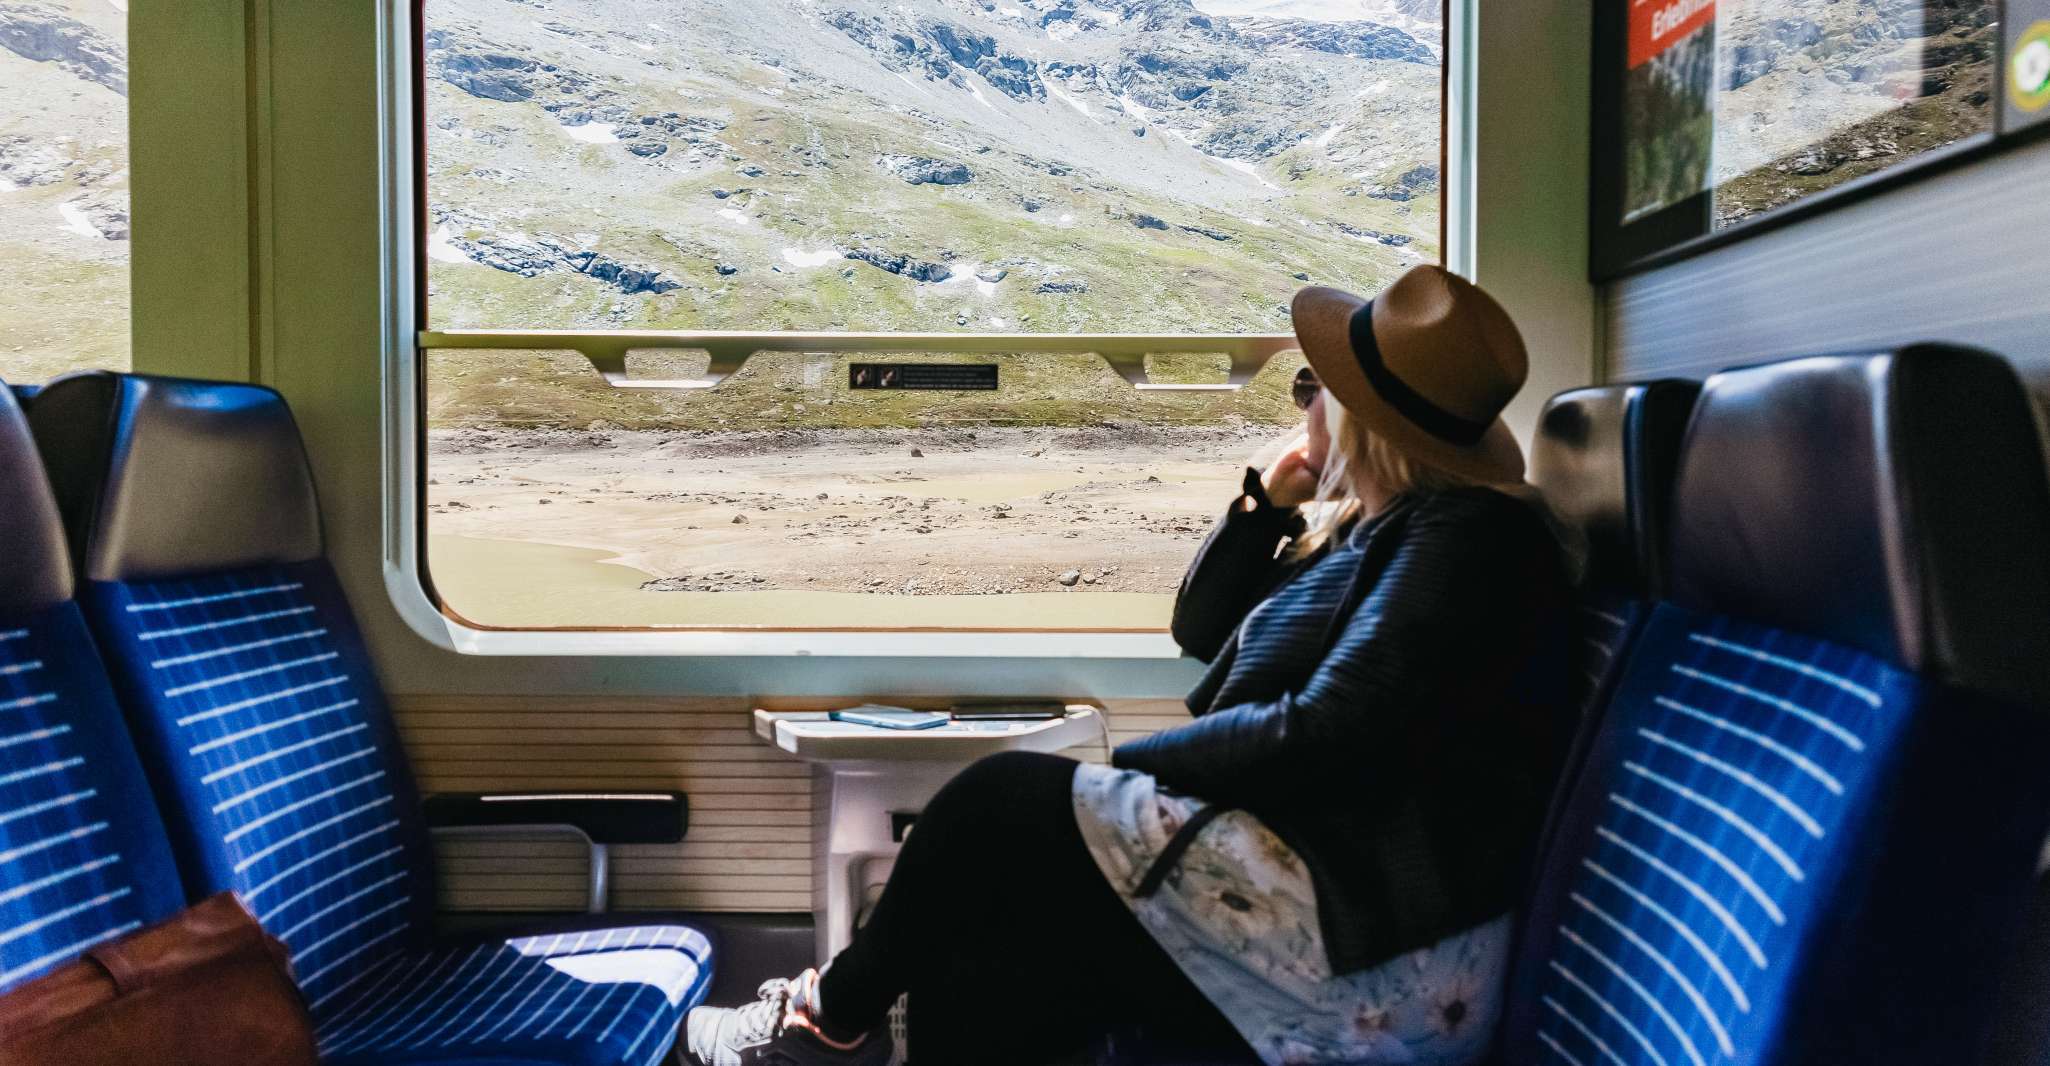 Tirano to St. Moritz, Bernina Red Train Return Day-Ticket - Housity